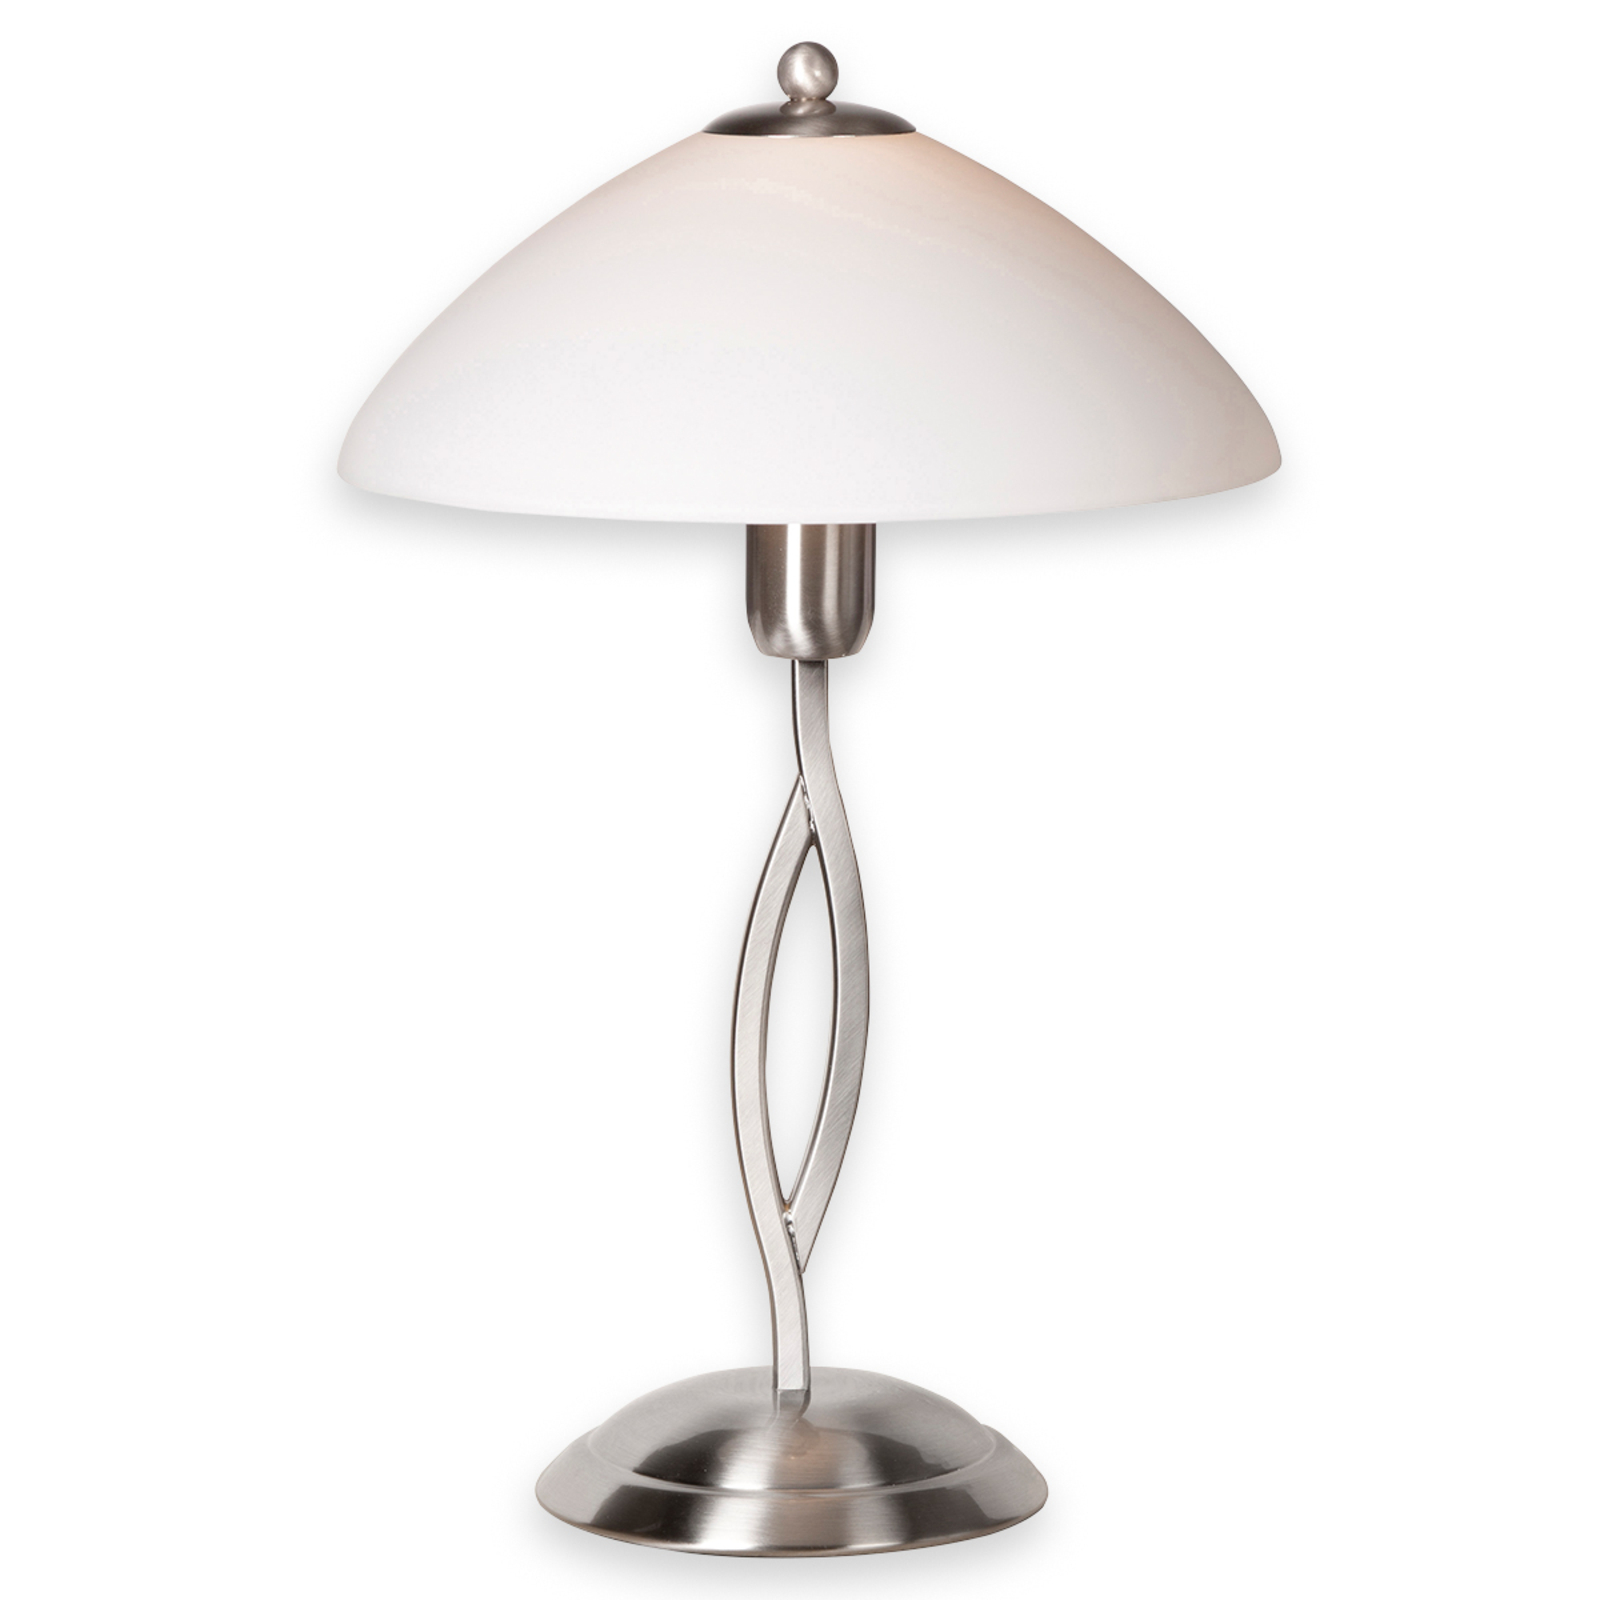 Capri bordlampen med en helt speciel charme